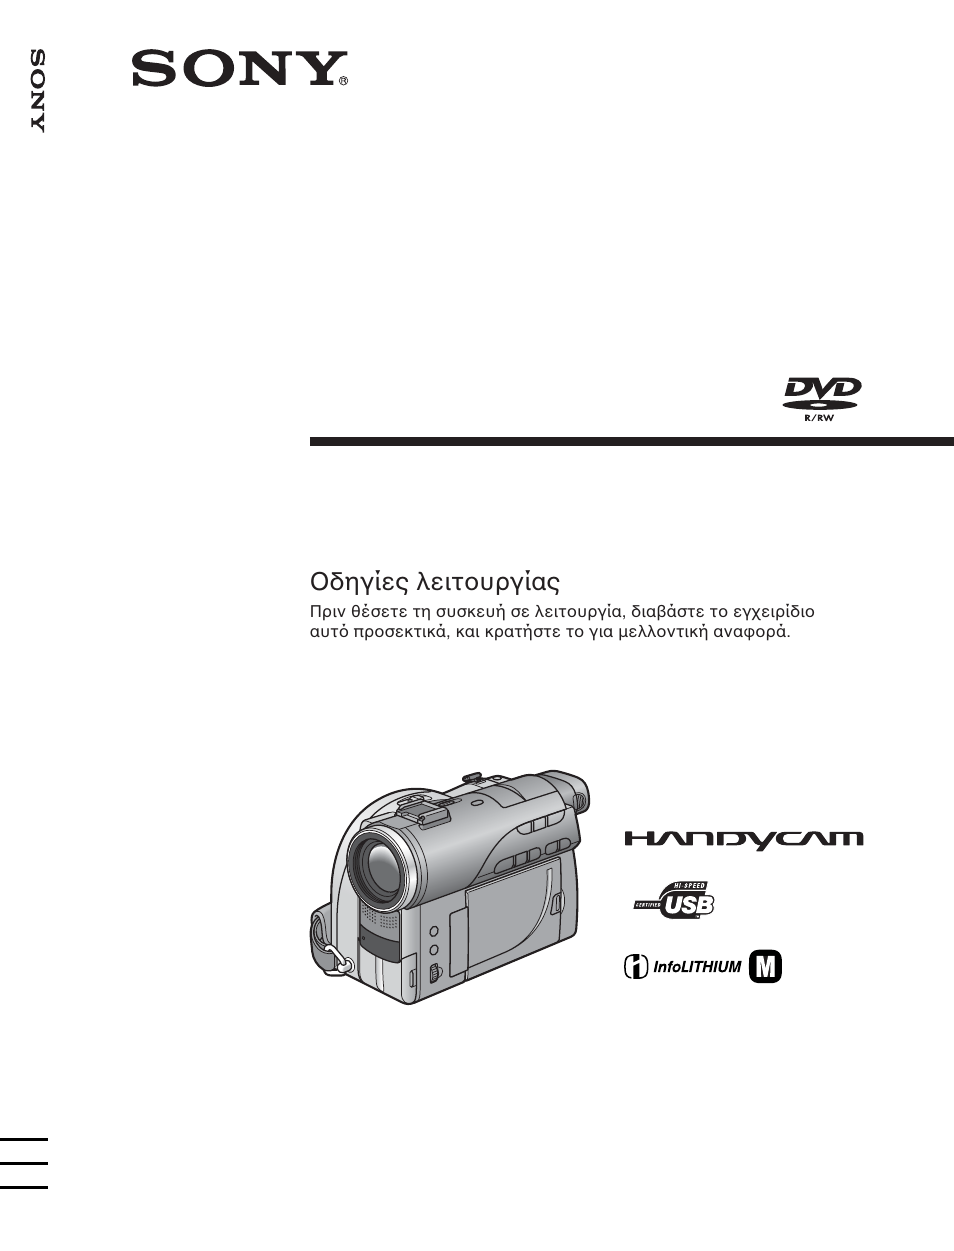 Sony DCR-DVD100E Manuale d'uso | Pagine: 292